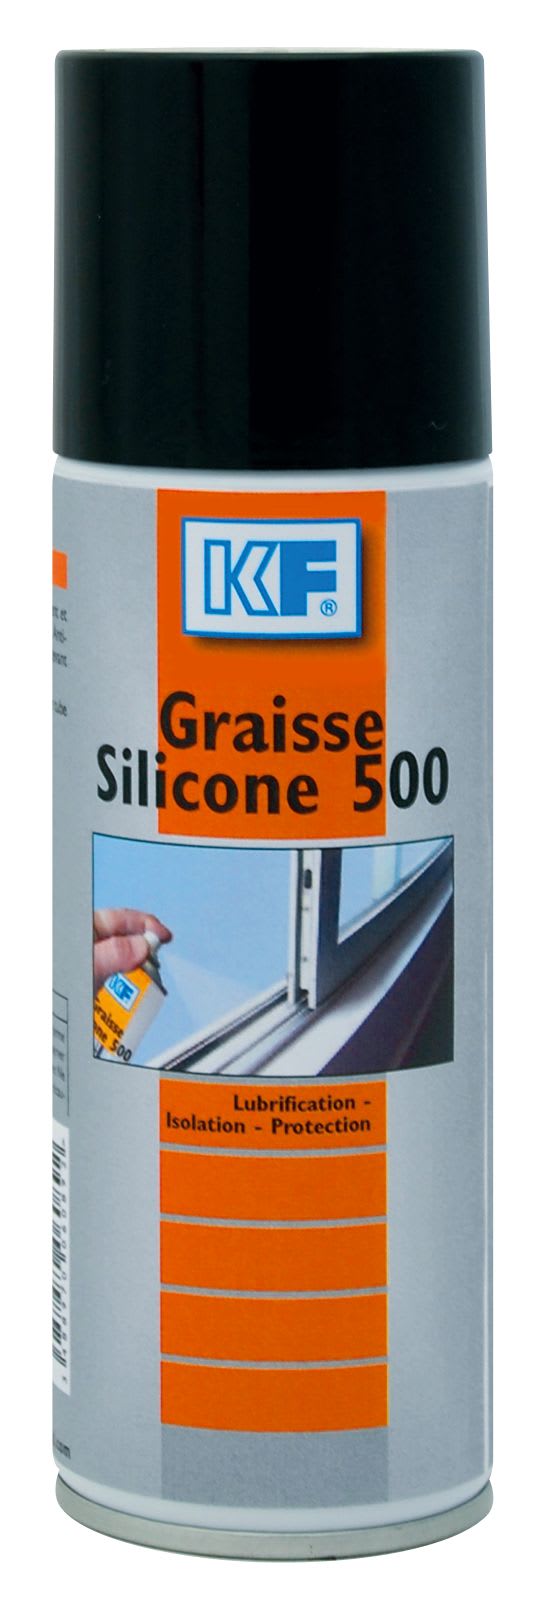 Kf - GRAISSE SILICONE 500 400 ML